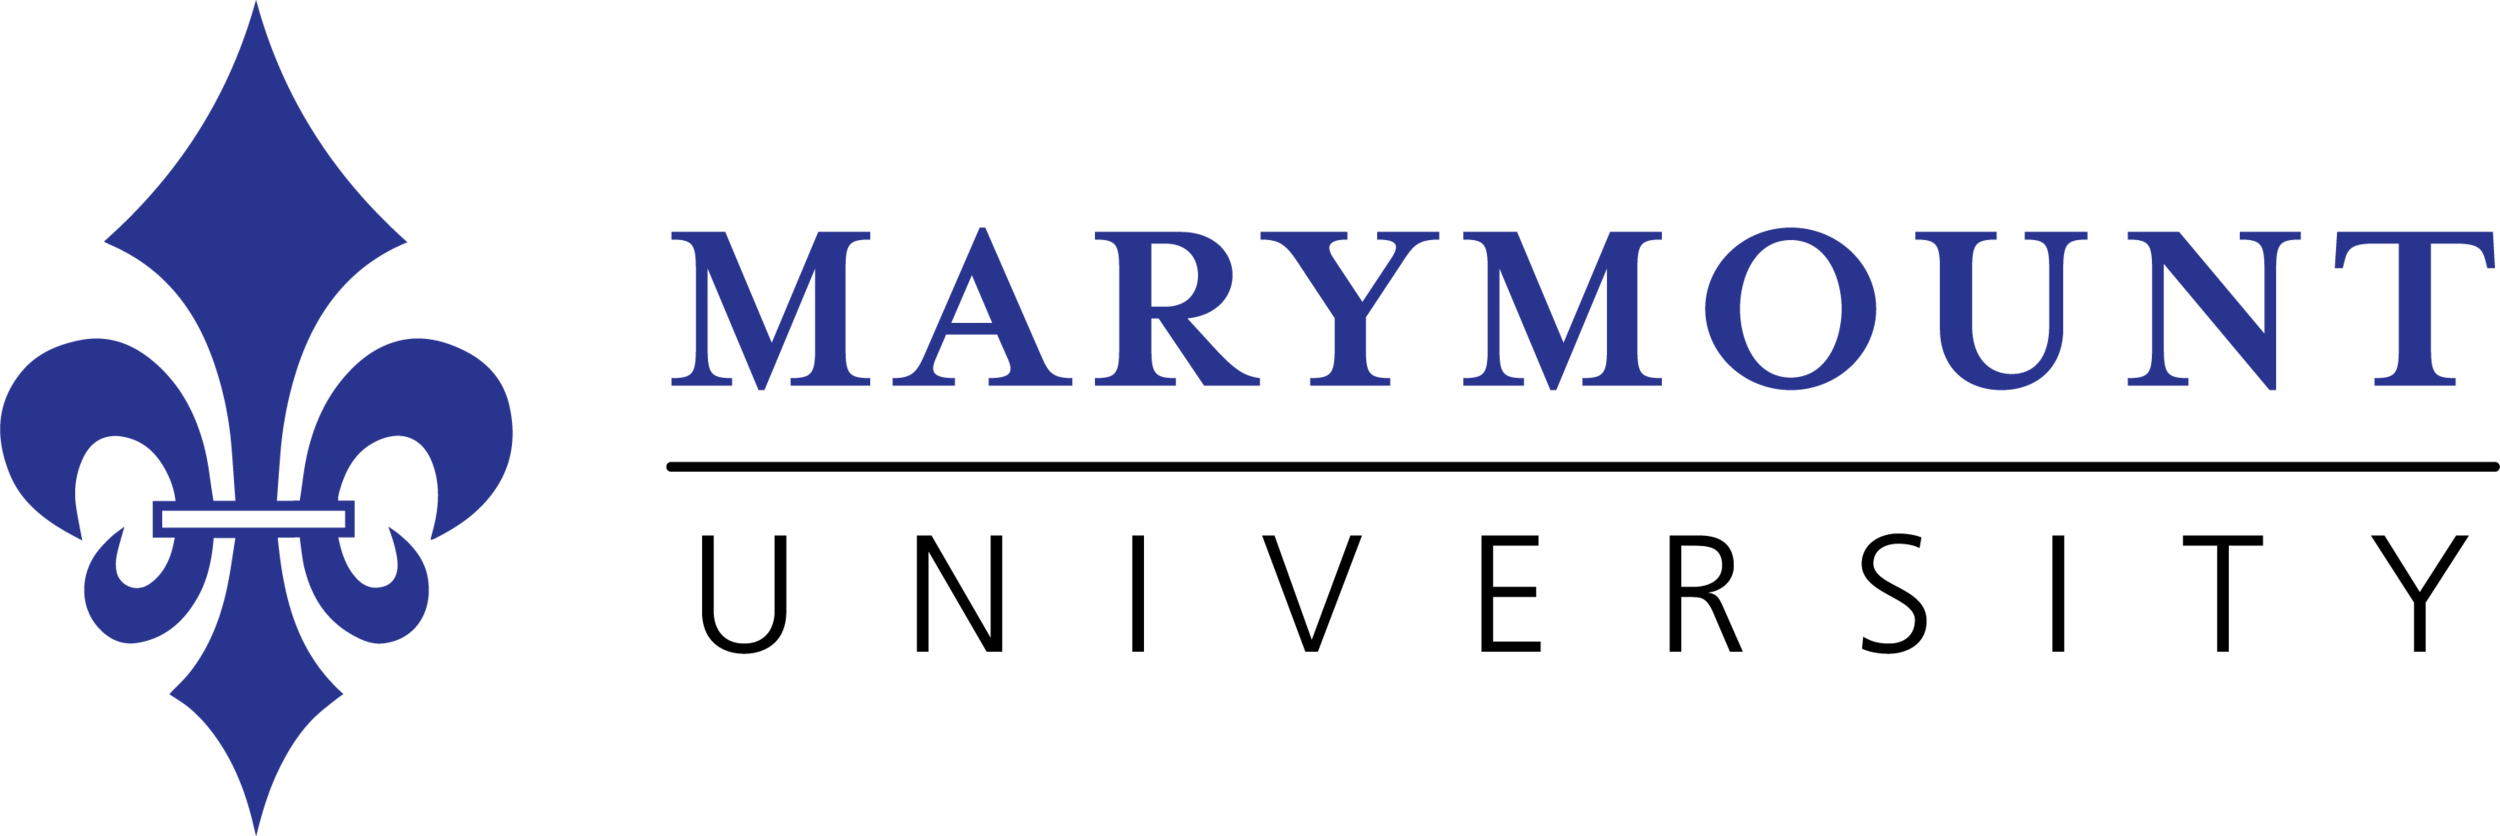 Marymount Univ. logotipo